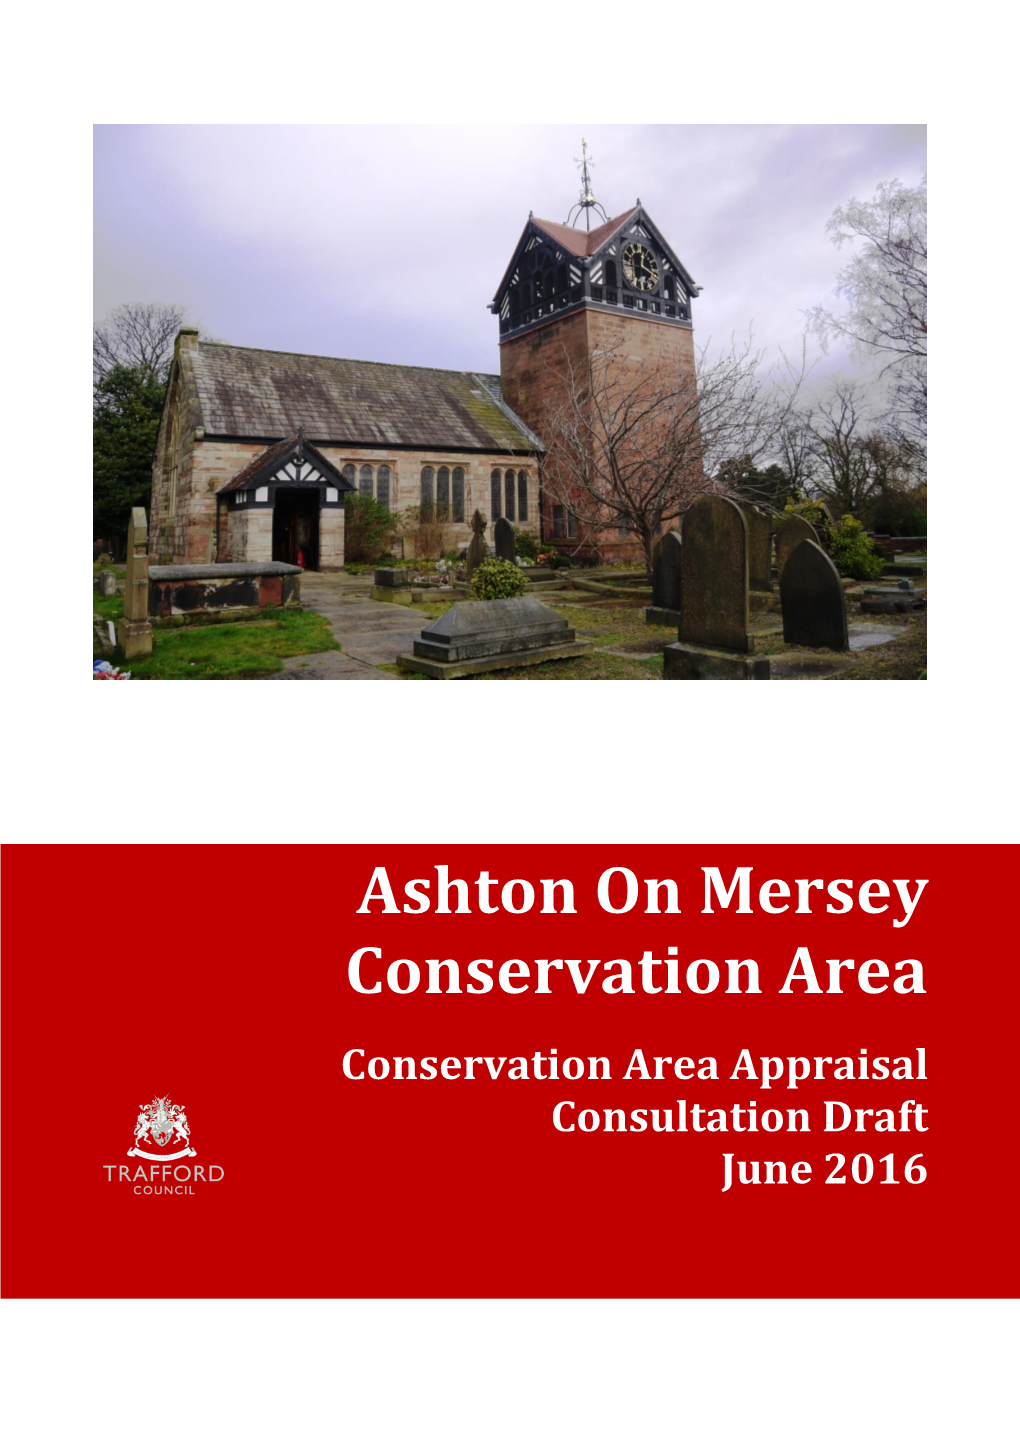 Conservation Area Appraisal Consultation Draft June 2016